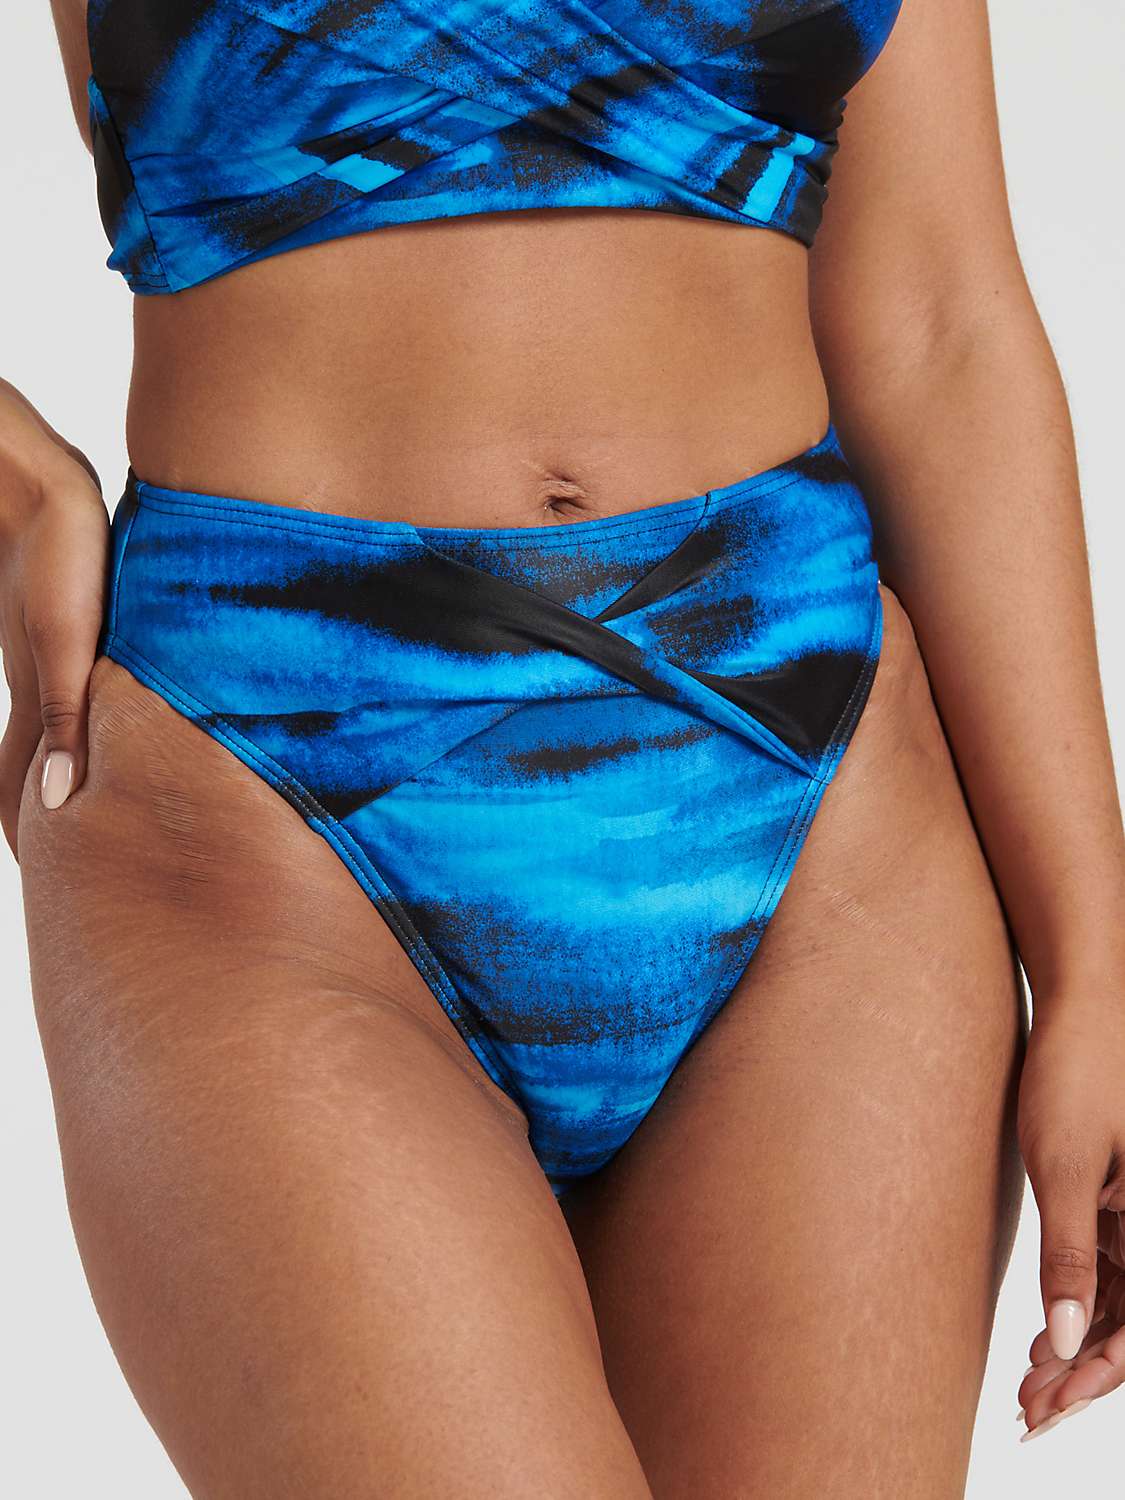 Buy South Beach Printed Twisted Cup Halterneck Bikini Top, Blue/Multi Online at johnlewis.com